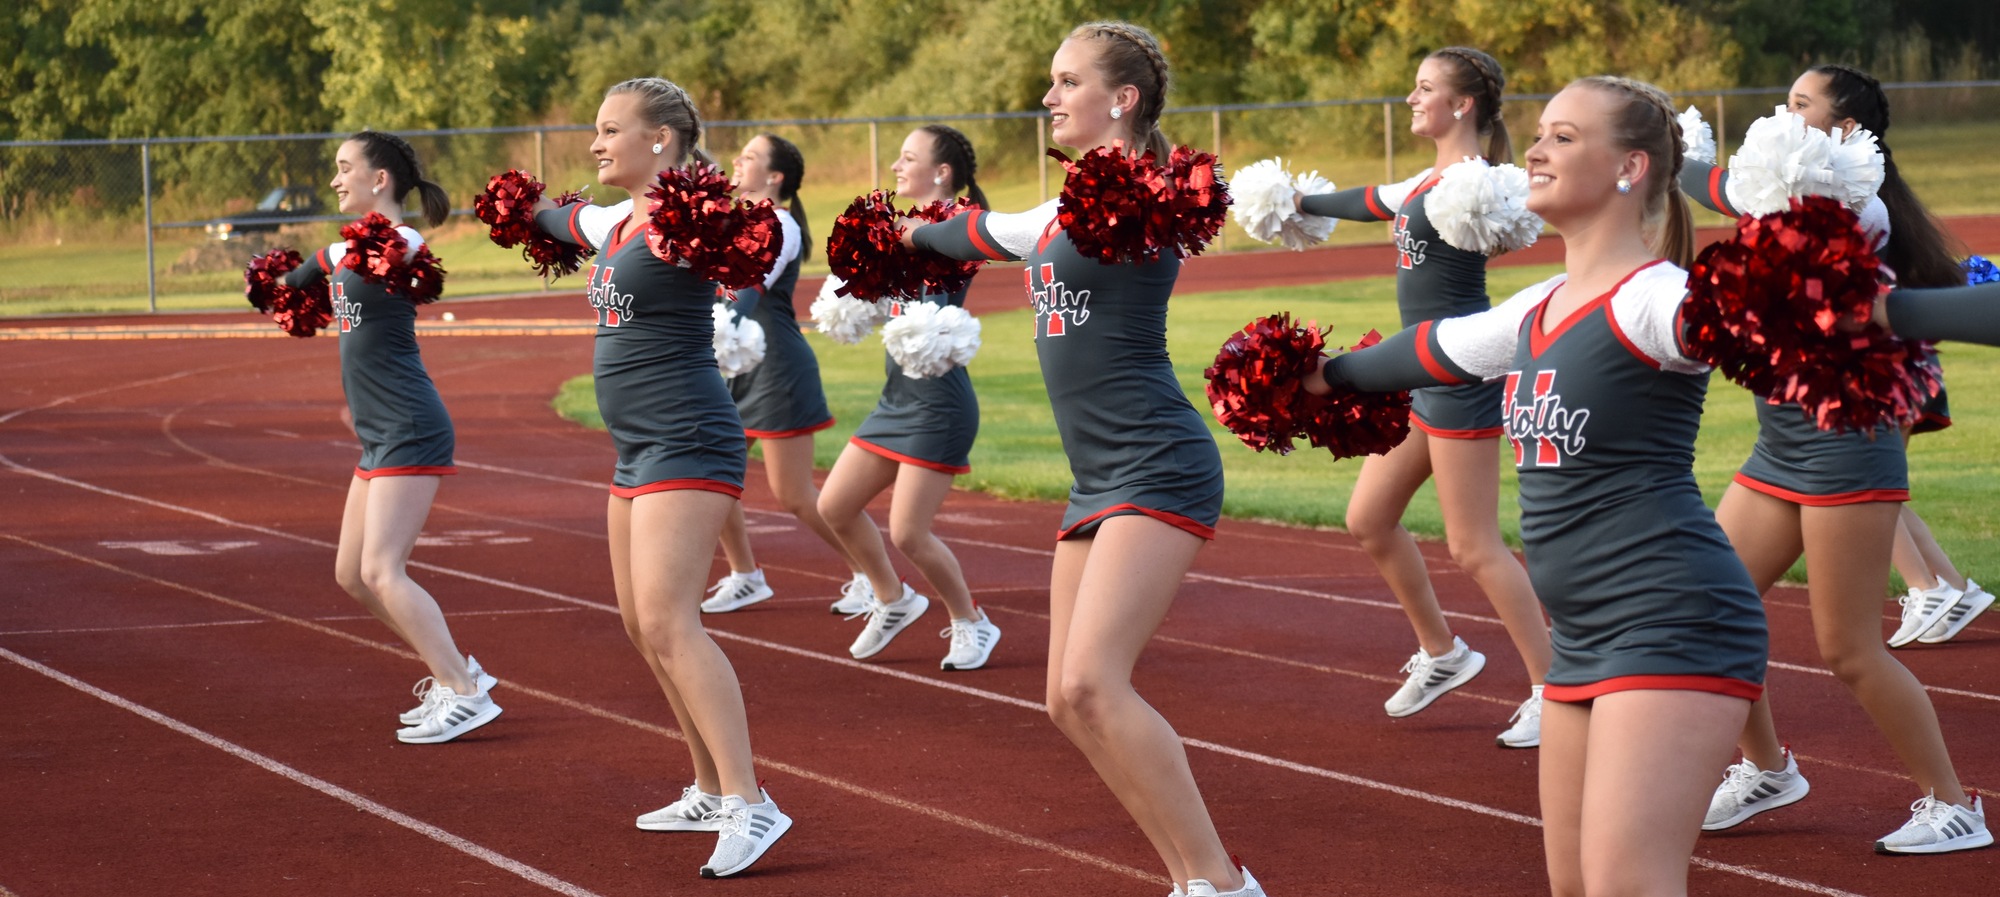 Cheerleaders cheering at a game